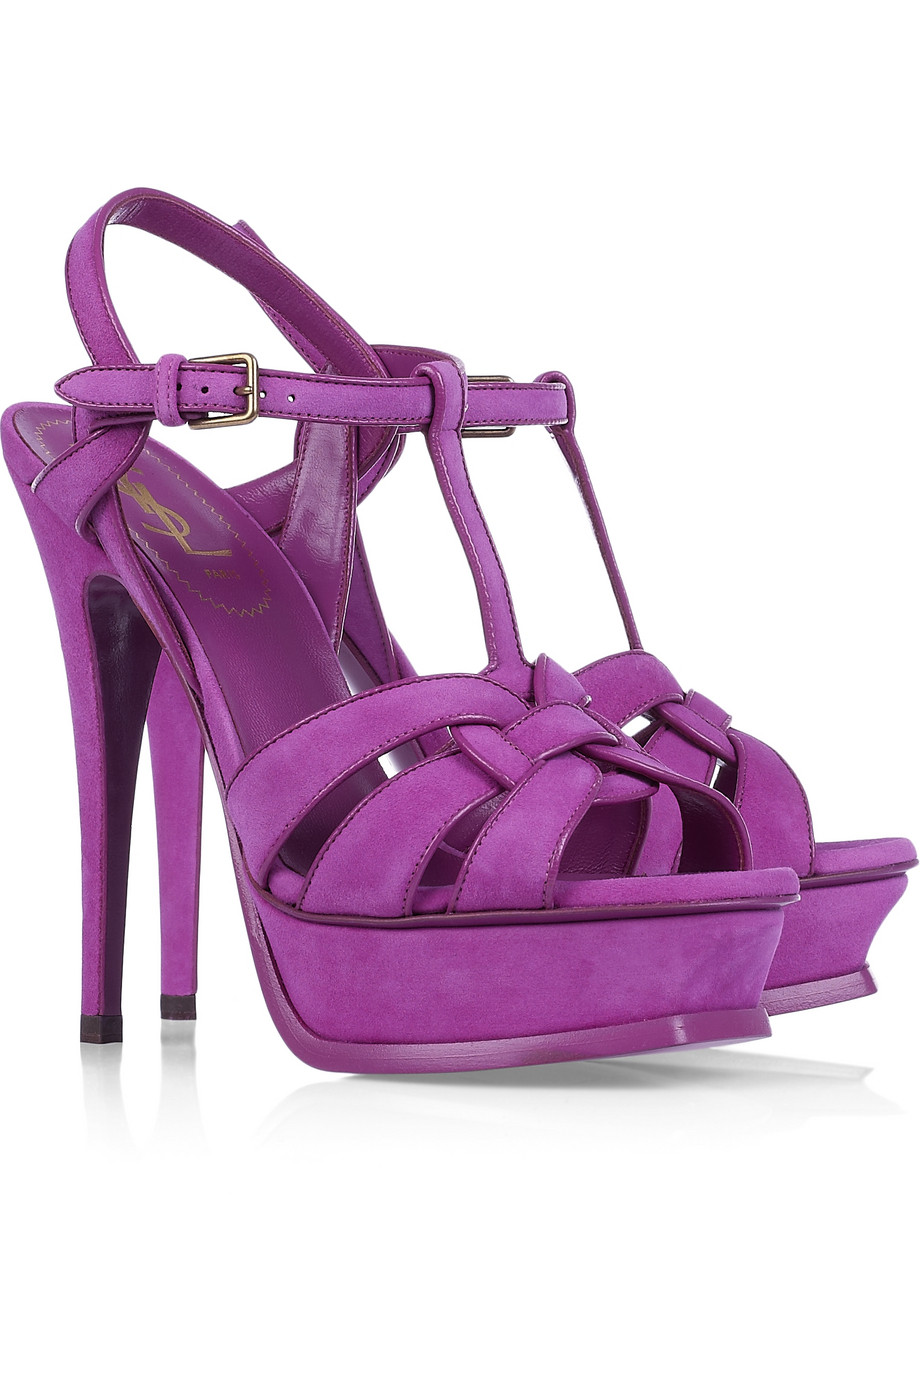 zapato-mujer-yves-saint-laurent-violeta